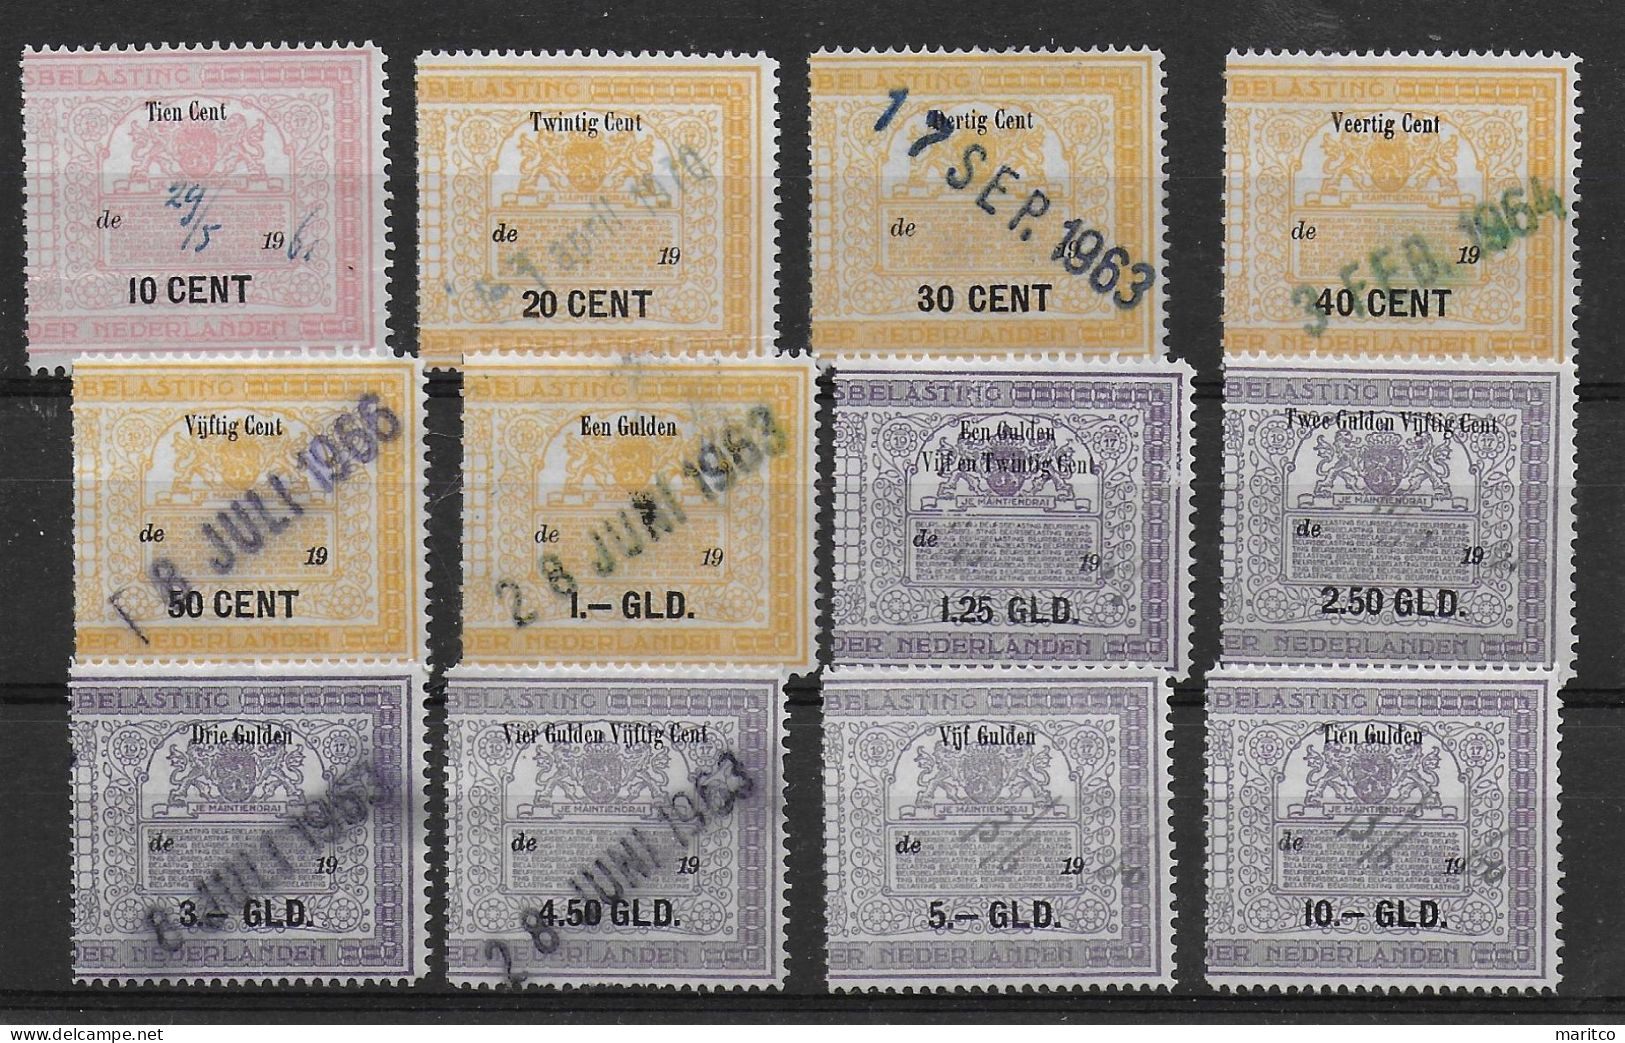 Netherlands Nederland  Fiscal Fiskal Stempelmarken Revenue Stamps Beursbelasting 1957 Lot - Fiscales